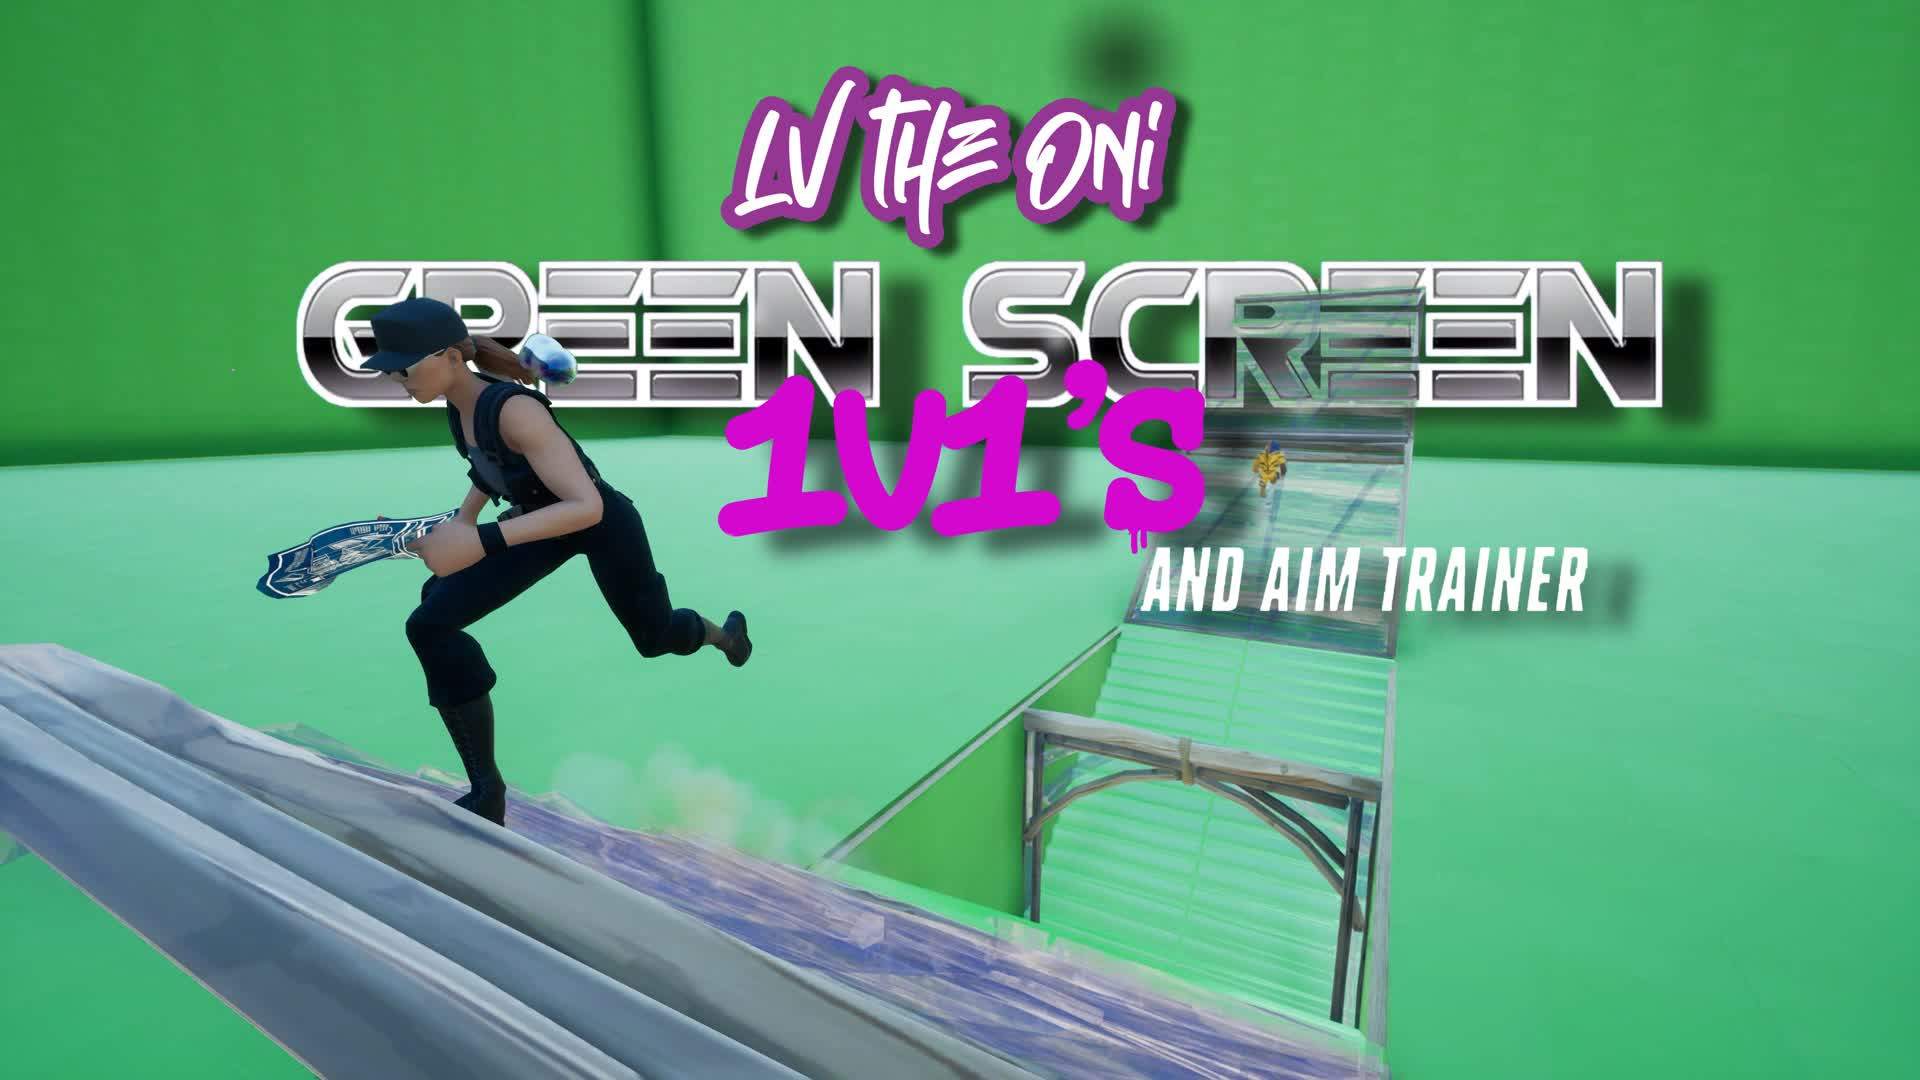 Green Screen 1v1's & AIM TRAINER